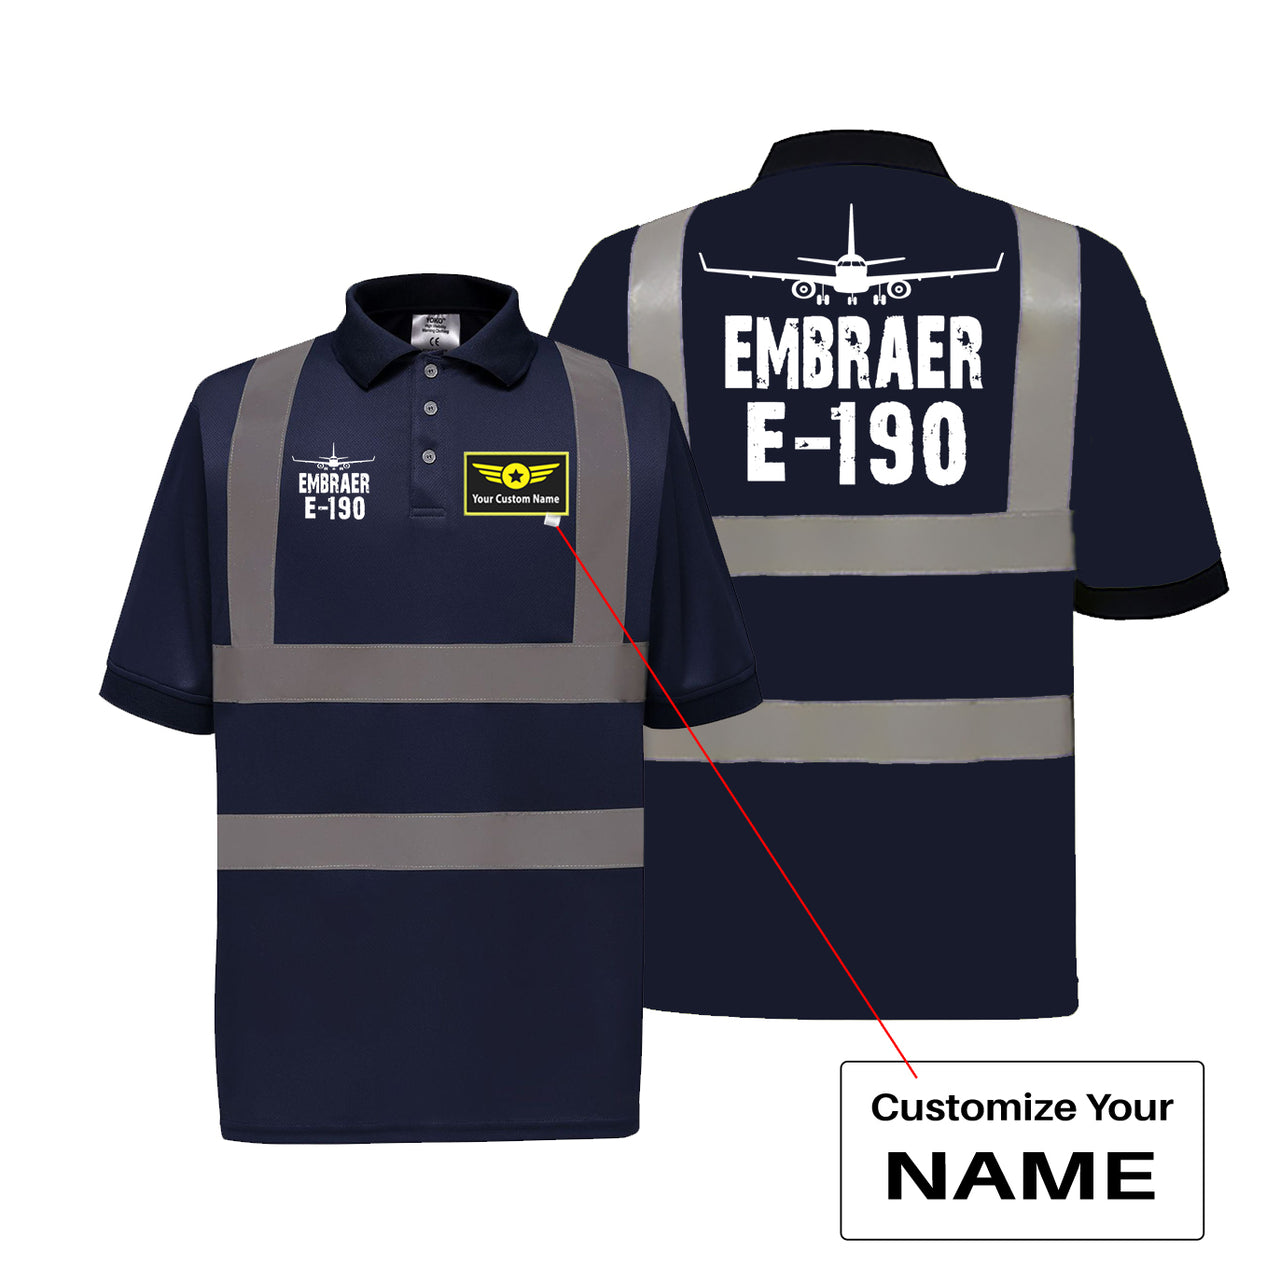 Embraer E-190 & Plane Designed Reflective Polo T-Shirts